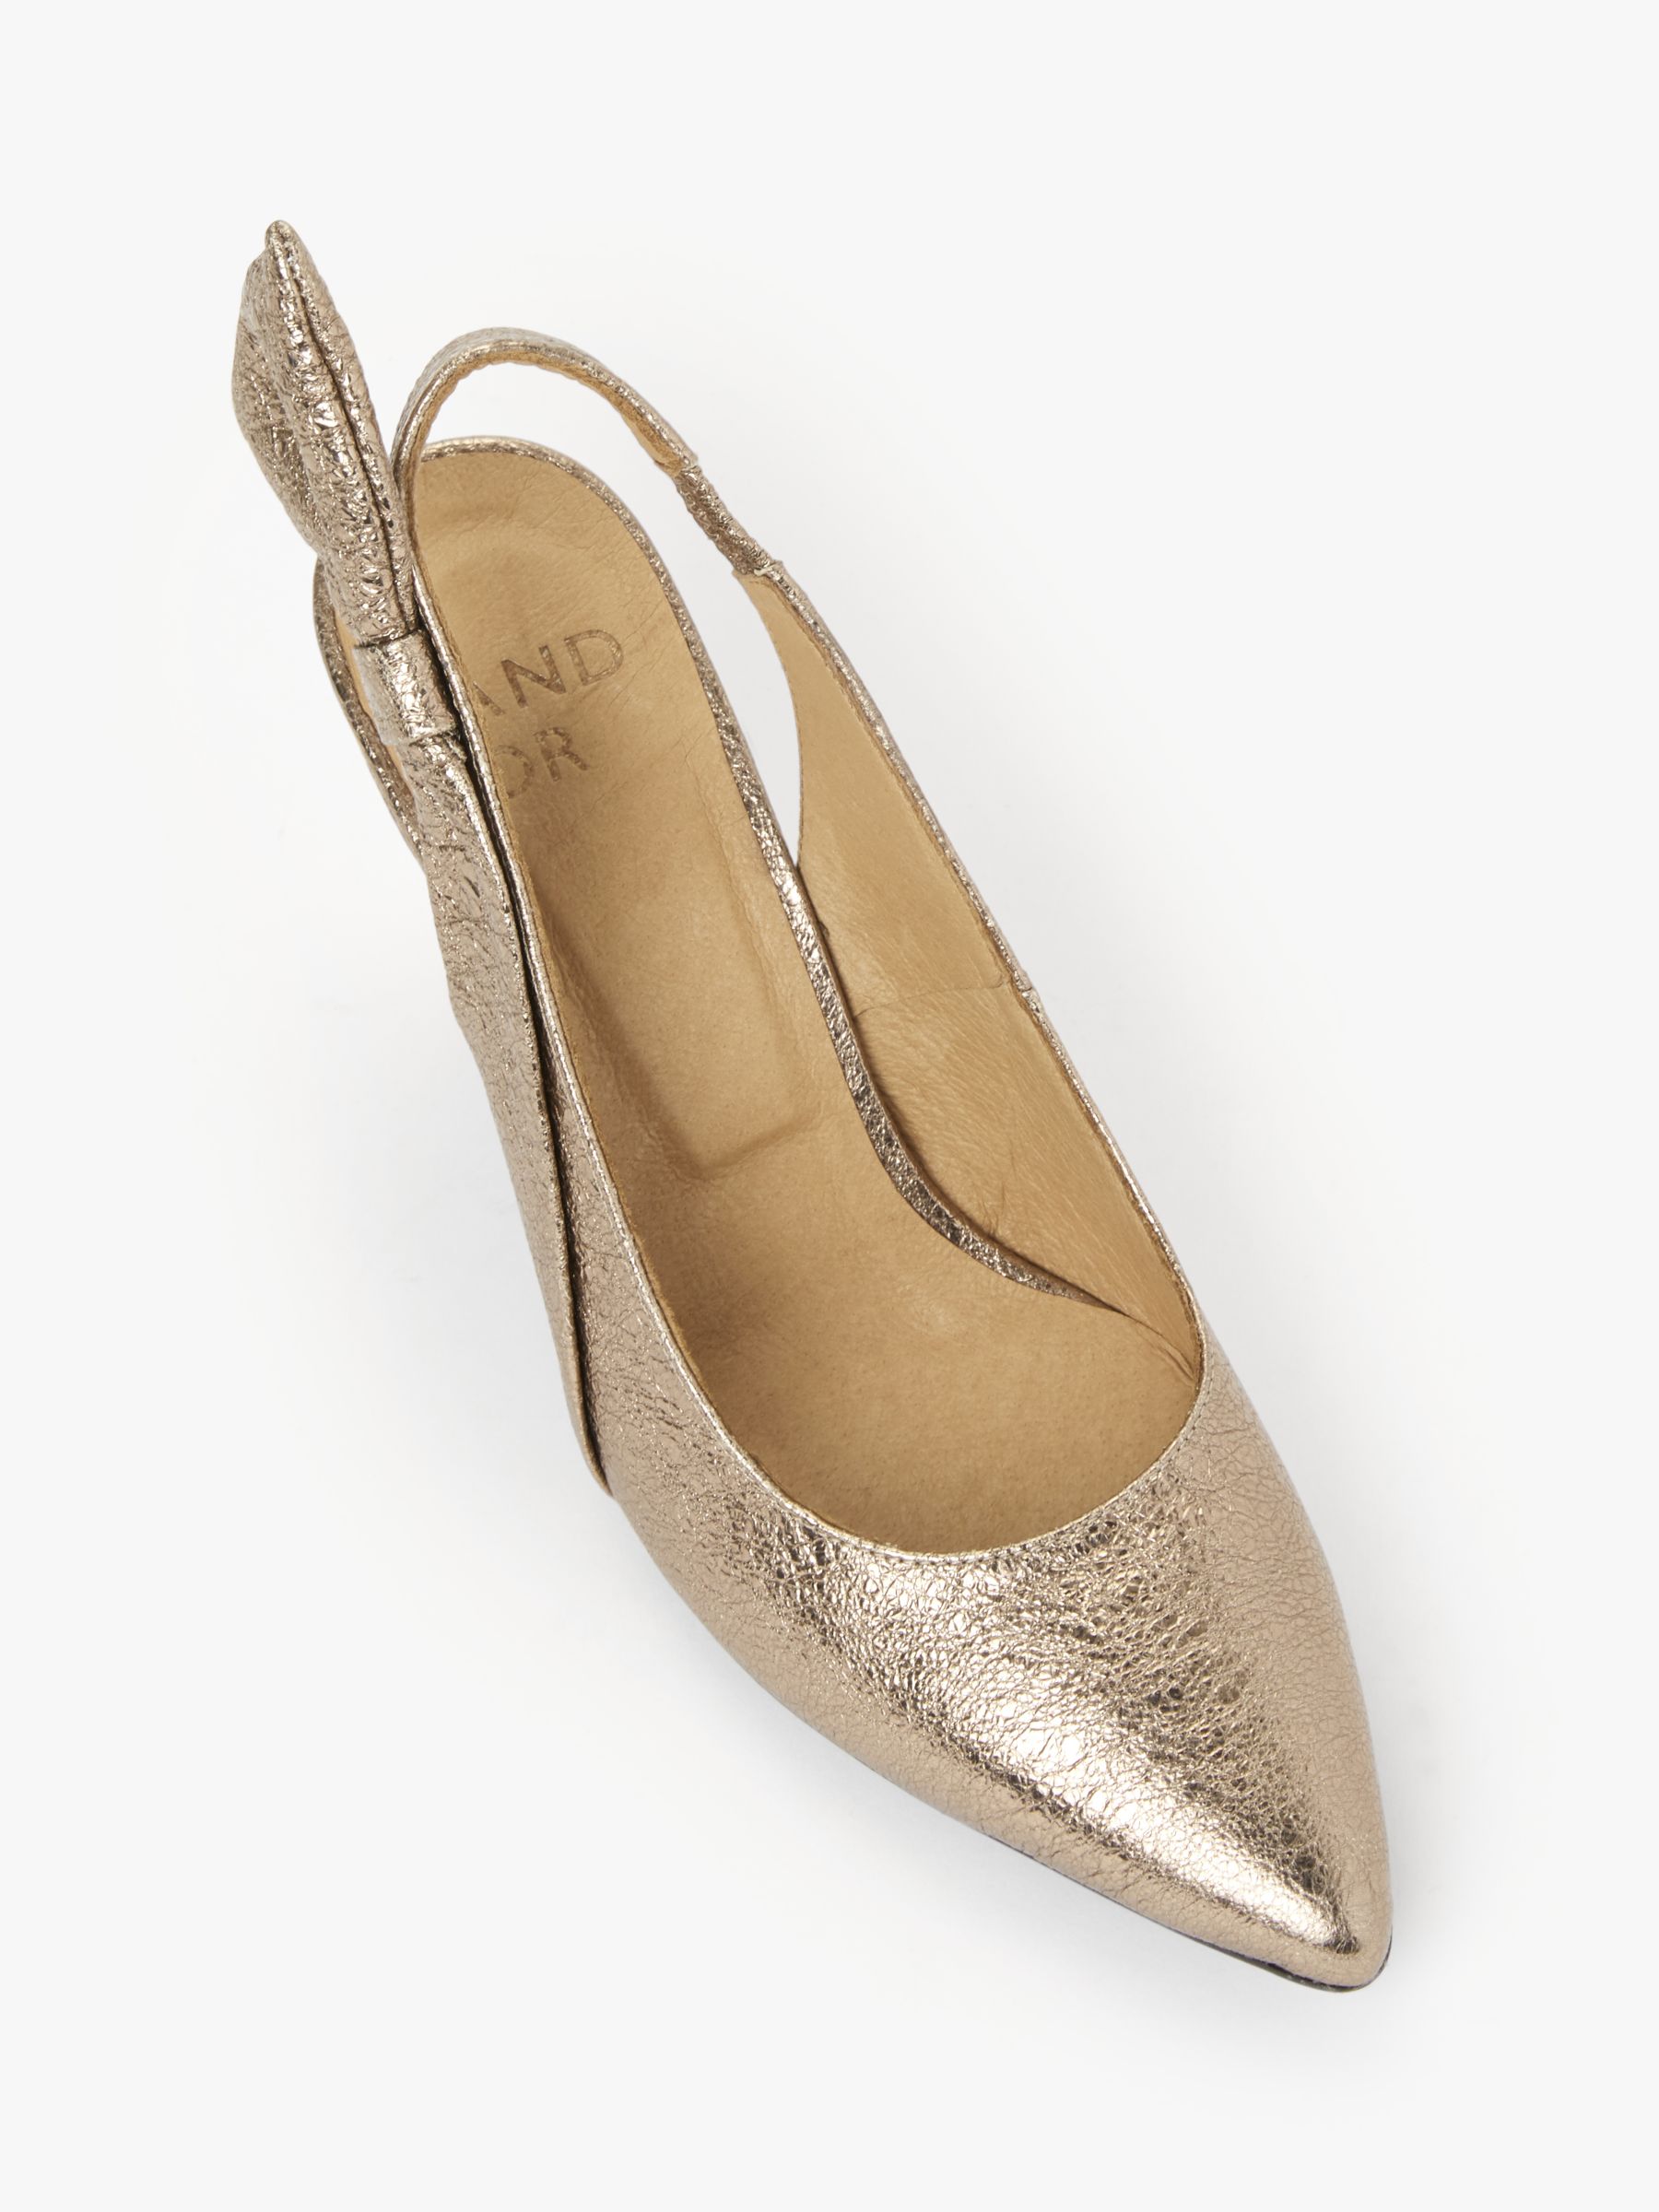 metallic gold shoes